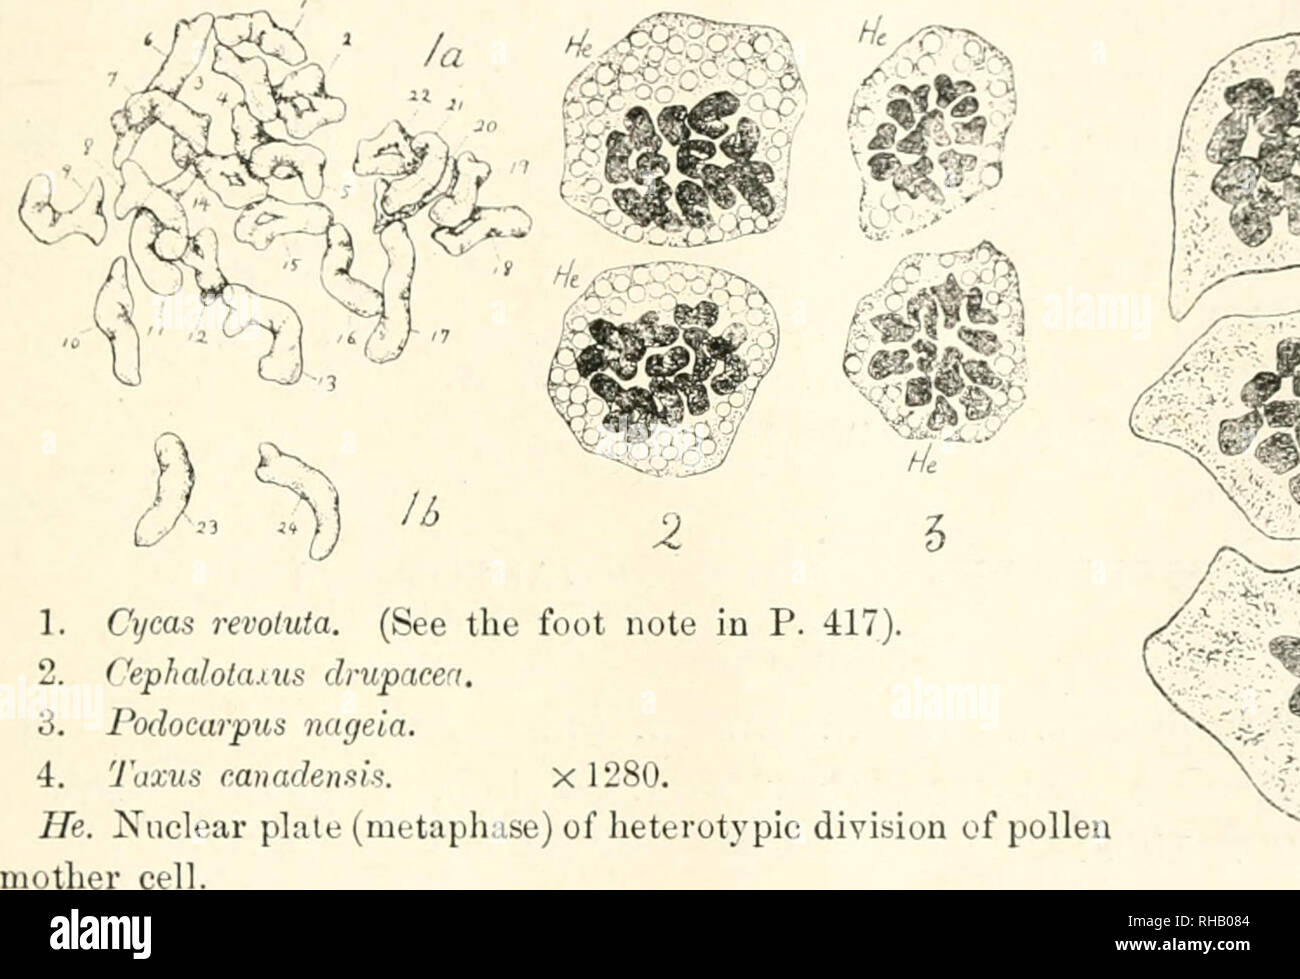 . The Botanical magazine. Plants; Plants -- Japan. /,s'???'.l I?1. —???/': MJ.yiiKI! OF &lt; HllOMOSoMhS Cryptomeria japonica Law SON ? Ann. Hot. is. 1904-. Taxodium disticuni L)oki:k ? Hot. (?az. 3(5.190?{. Tetraclinus articulata Saxton ? Ann. Bot. 27.191?'.. Actinostrobus pyramidalis Saxton ? Ann. Bot. 27.1913. Callitris verrucosa Saxton : Ann. Bot. 24.1910. ?'.? 9 &lt;'i10 12, or11 12 8 8-10. Callitris cupressiforme ±12 C. Muelleri? ±12 Saxton ? Rot. Gaz. 48.1909. Widdringtonia cupressoides 6 Saxton ? Bot. Gaz. 50.1910. Araucaria brasiliensis.… 8 BrRi.iNGAMK ? Bot. Gaz. 55.1913. A. Bidwill Stock Photo